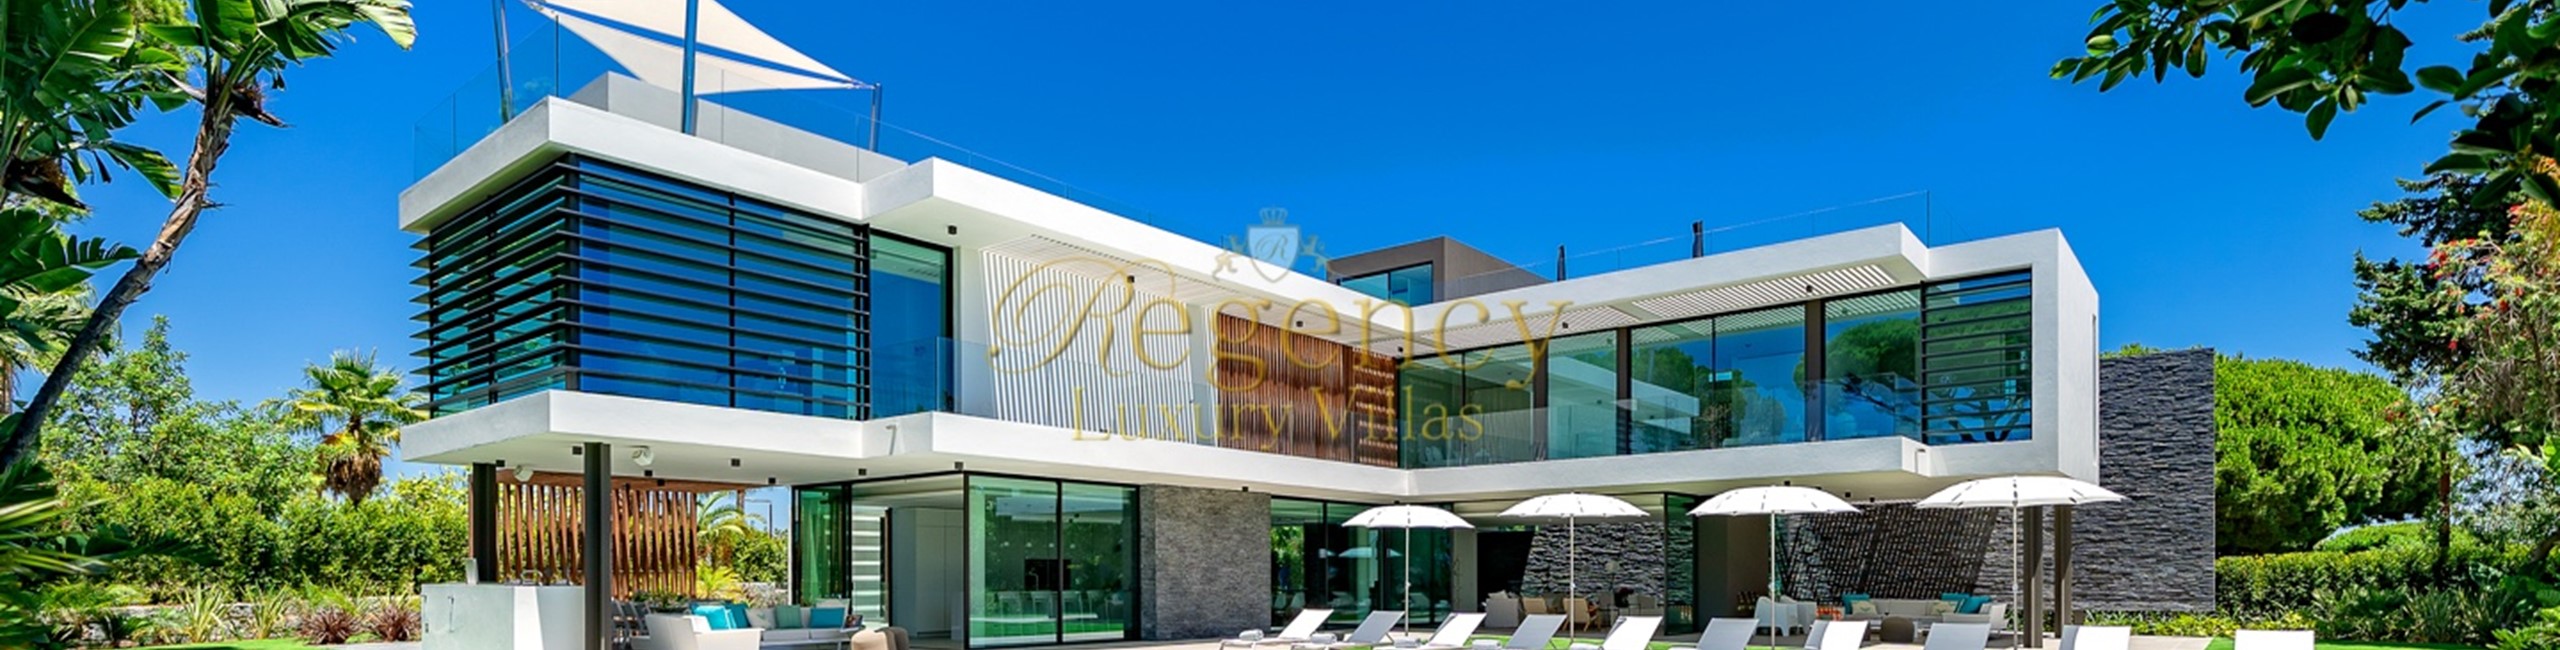 Luxury Villa To Rent In Vale Do Lobo With Cinema Room